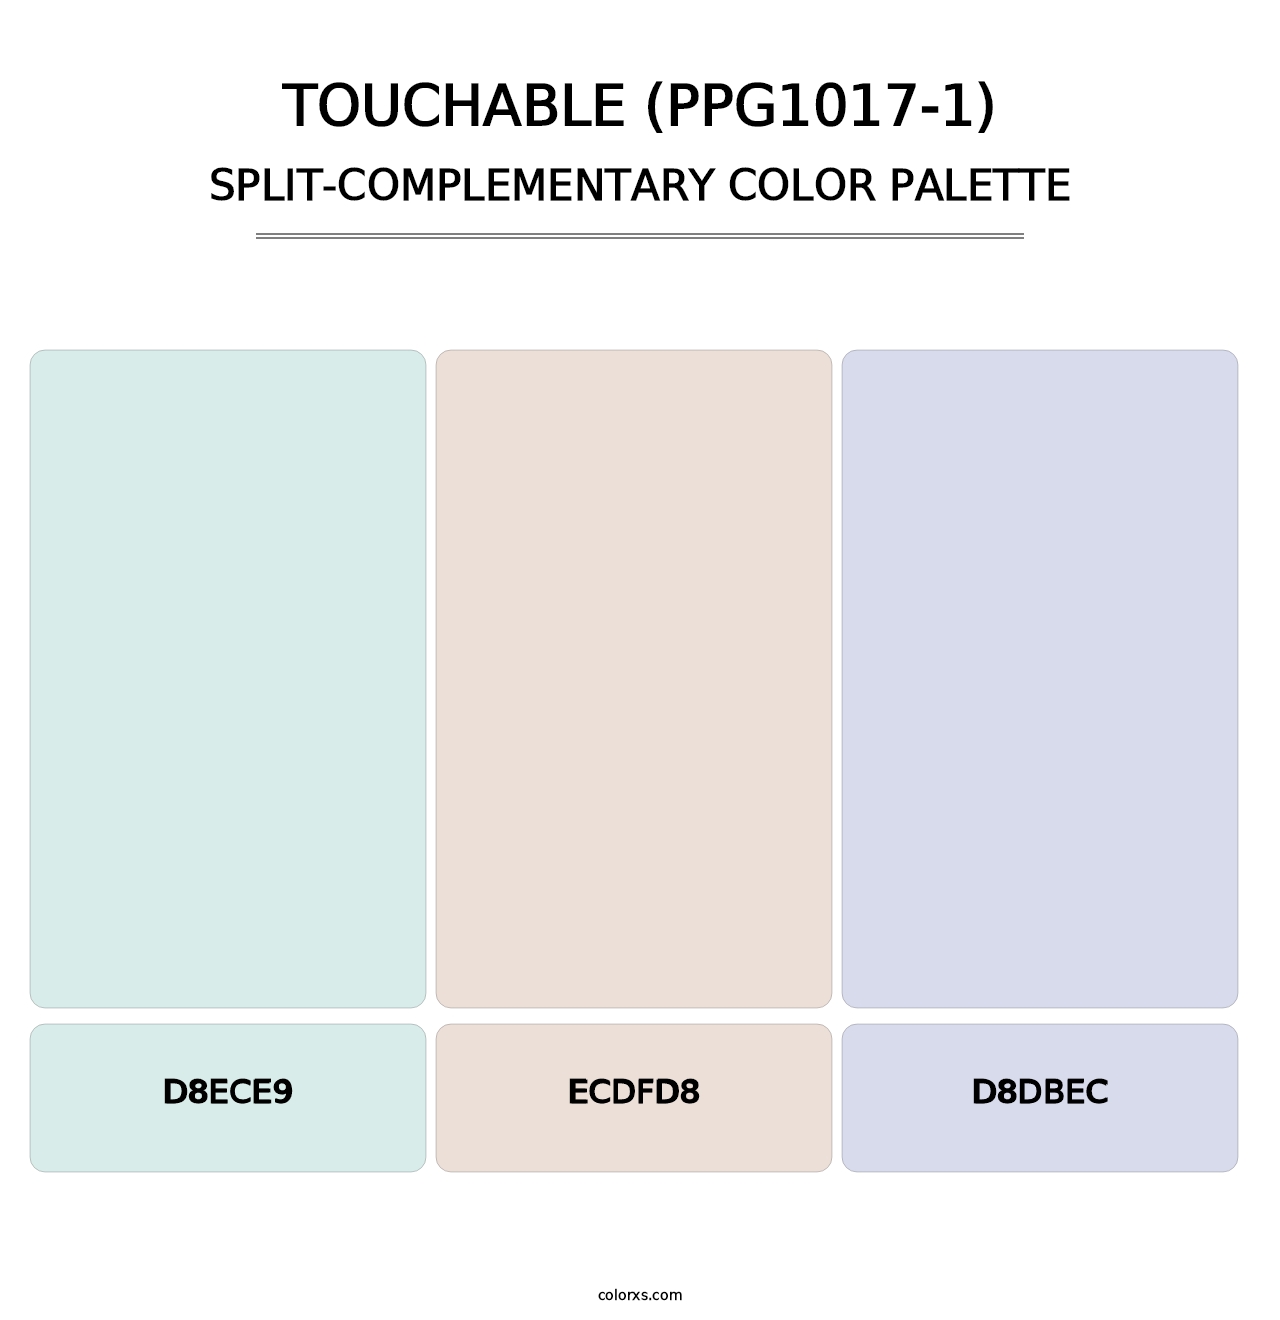 Touchable (PPG1017-1) - Split-Complementary Color Palette